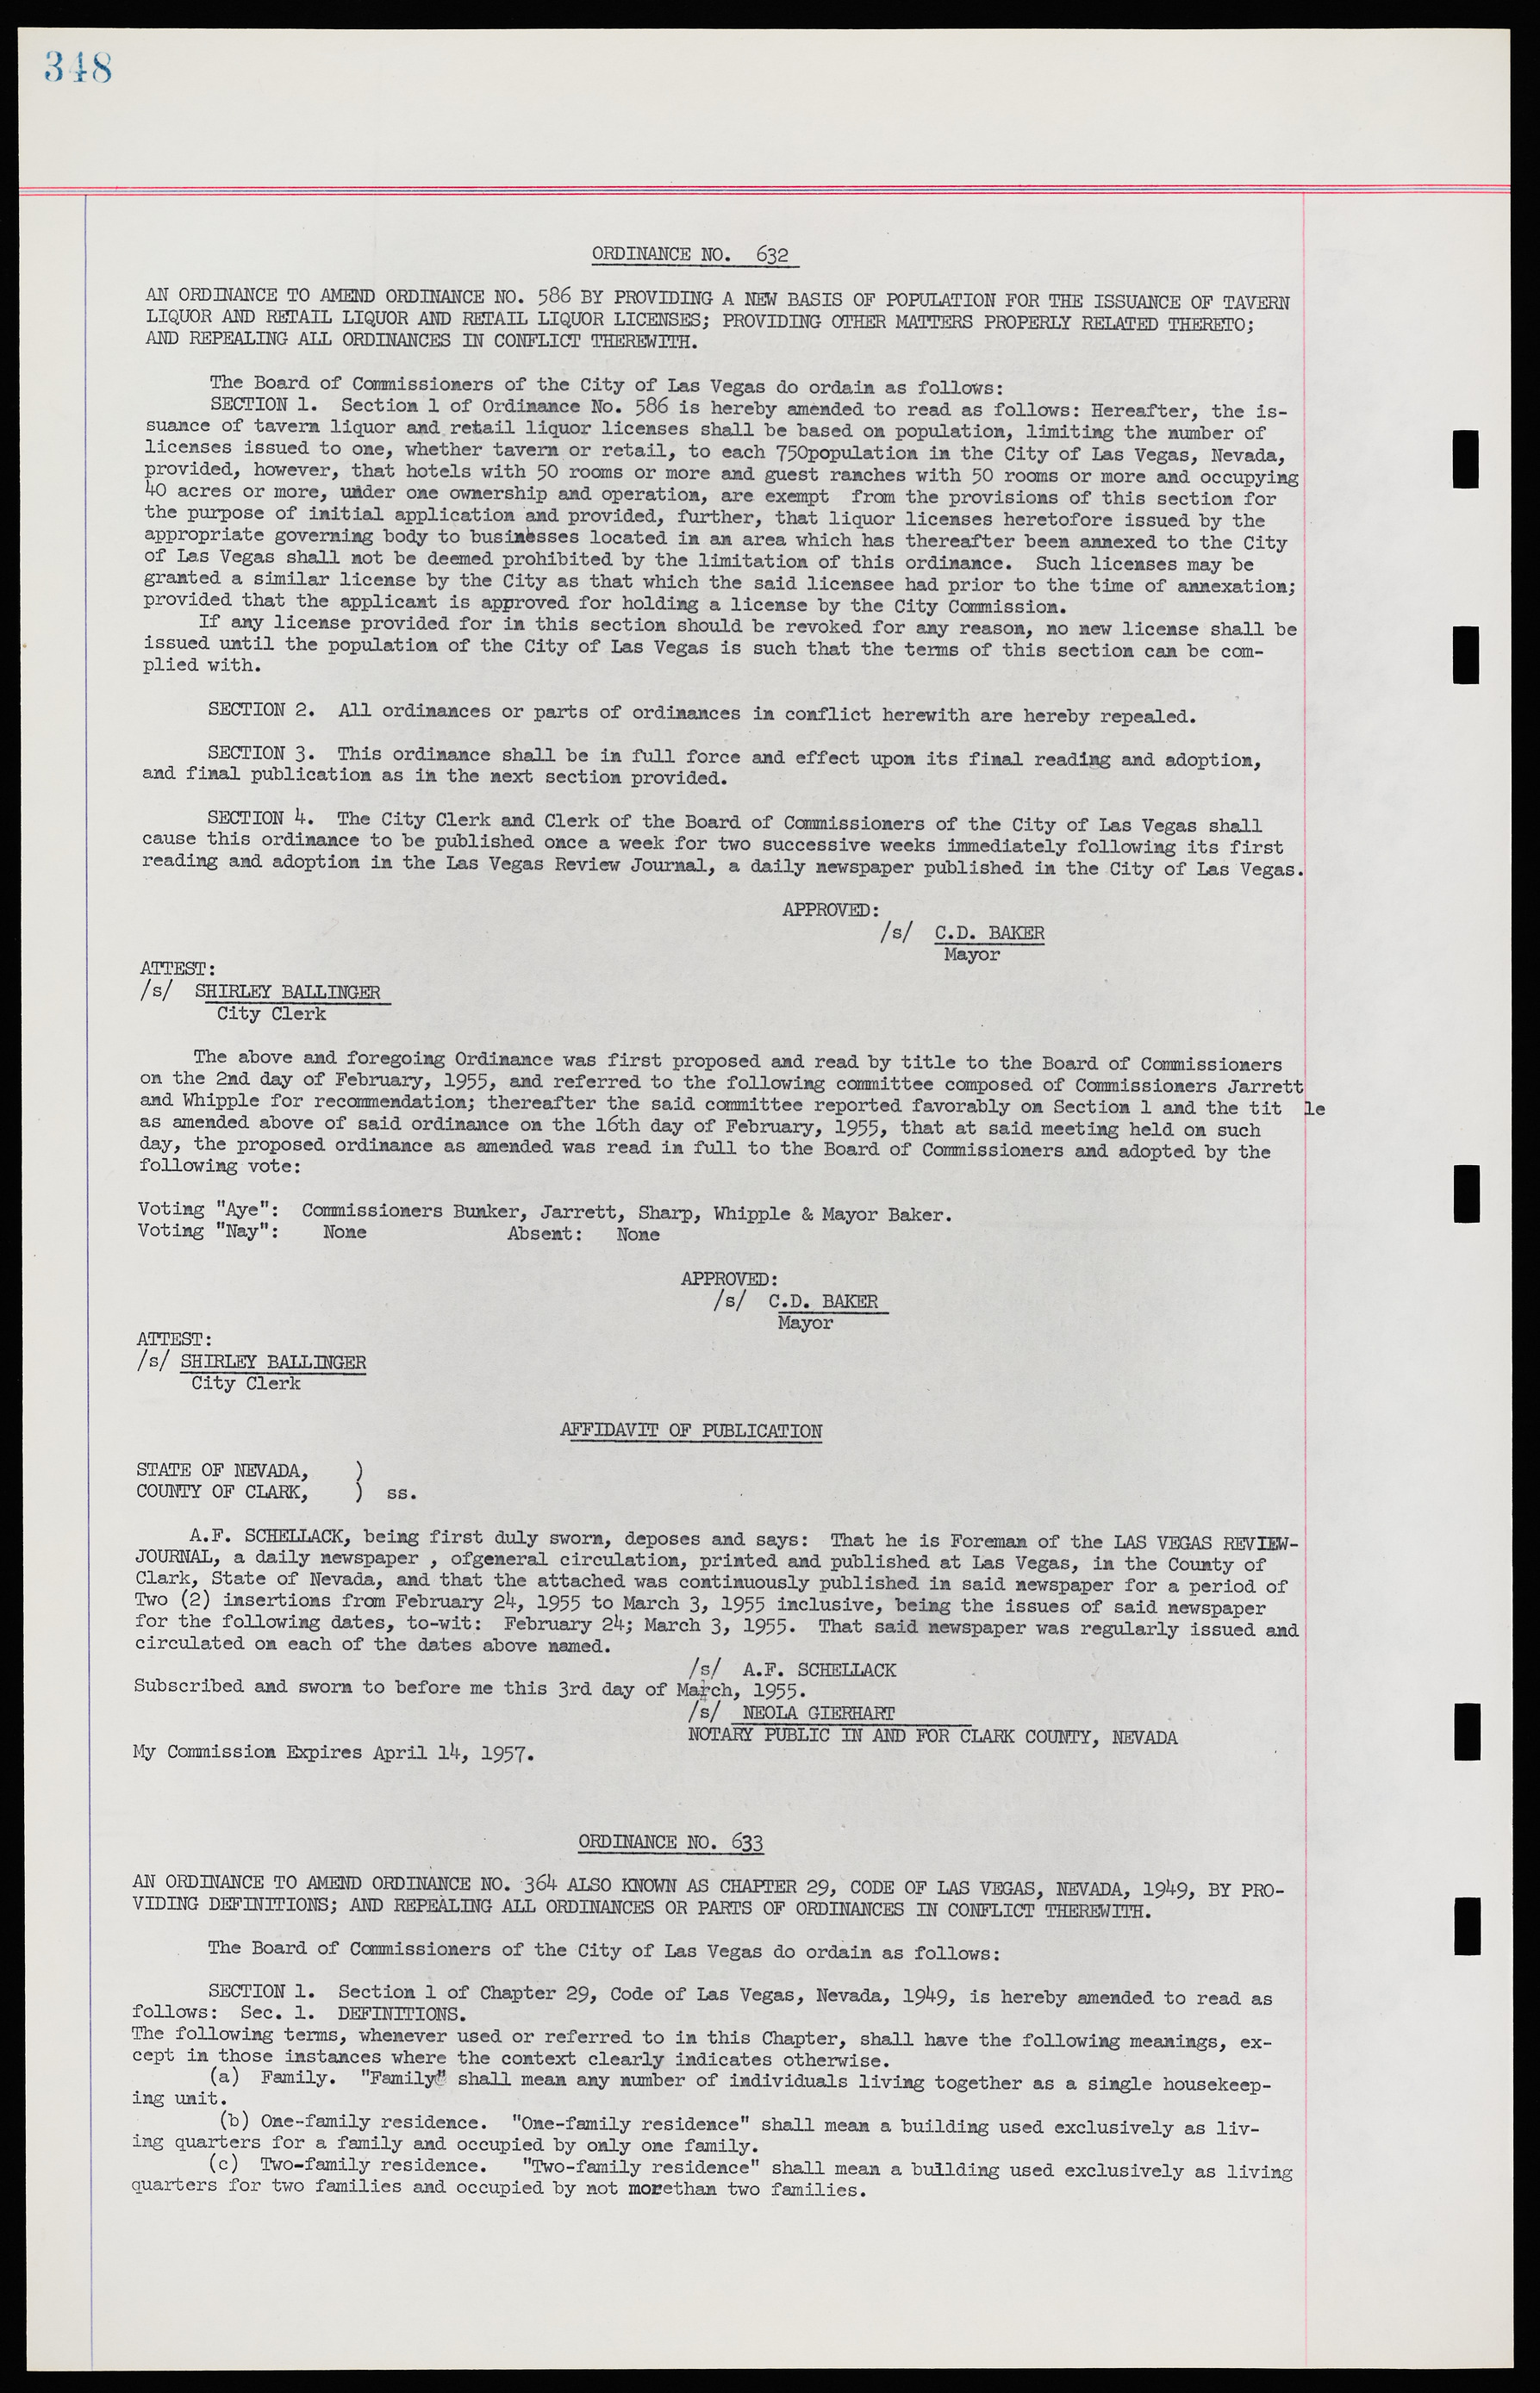 Las Vegas City Ordinances, November 13, 1950 to August 6, 1958, lvc000015-356